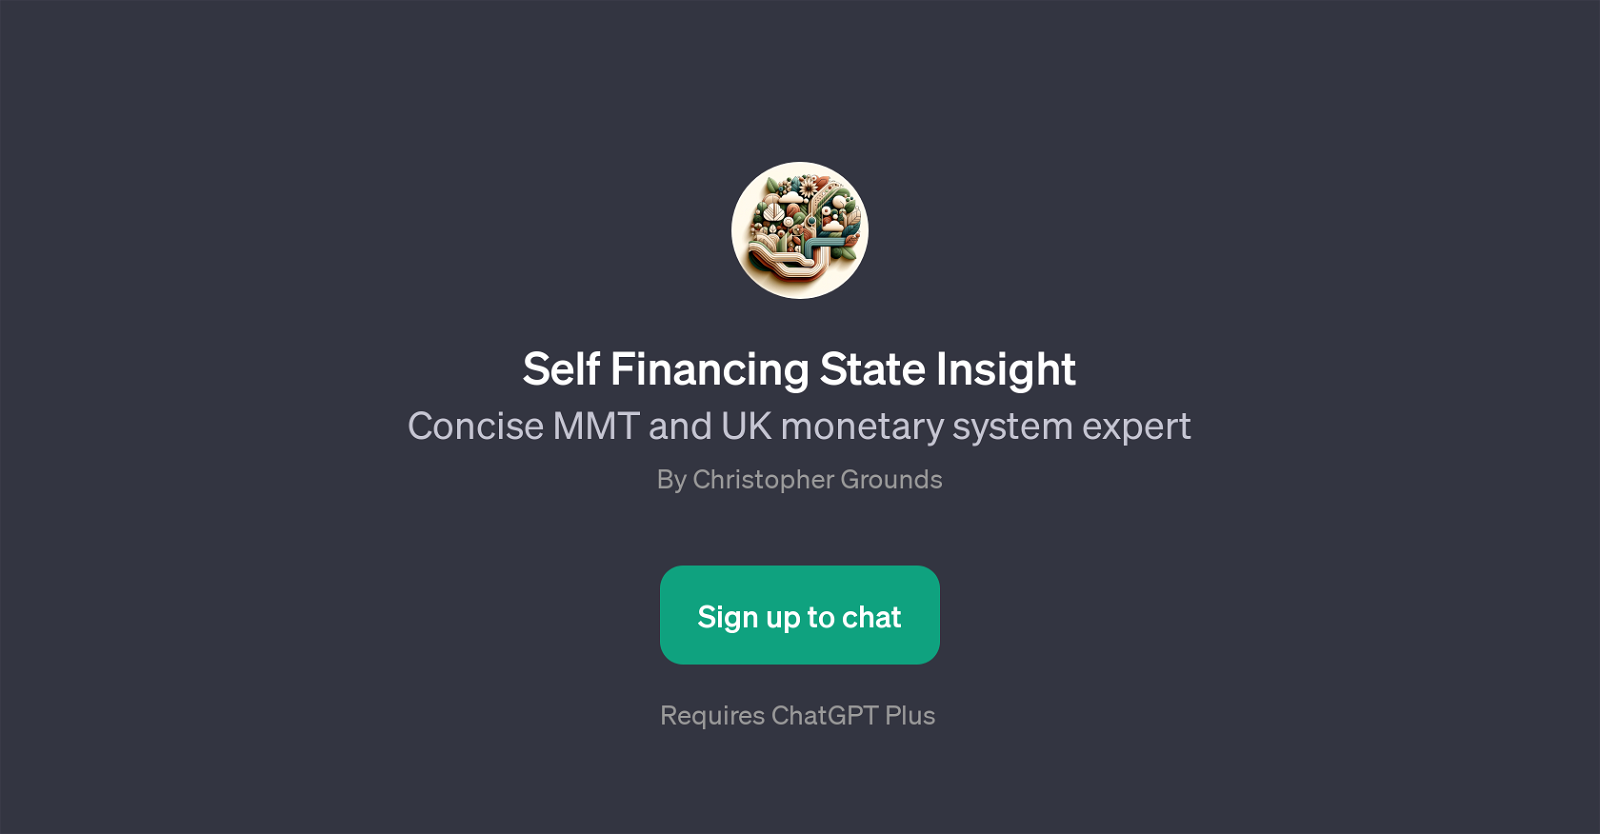 Self Financing State Insight website